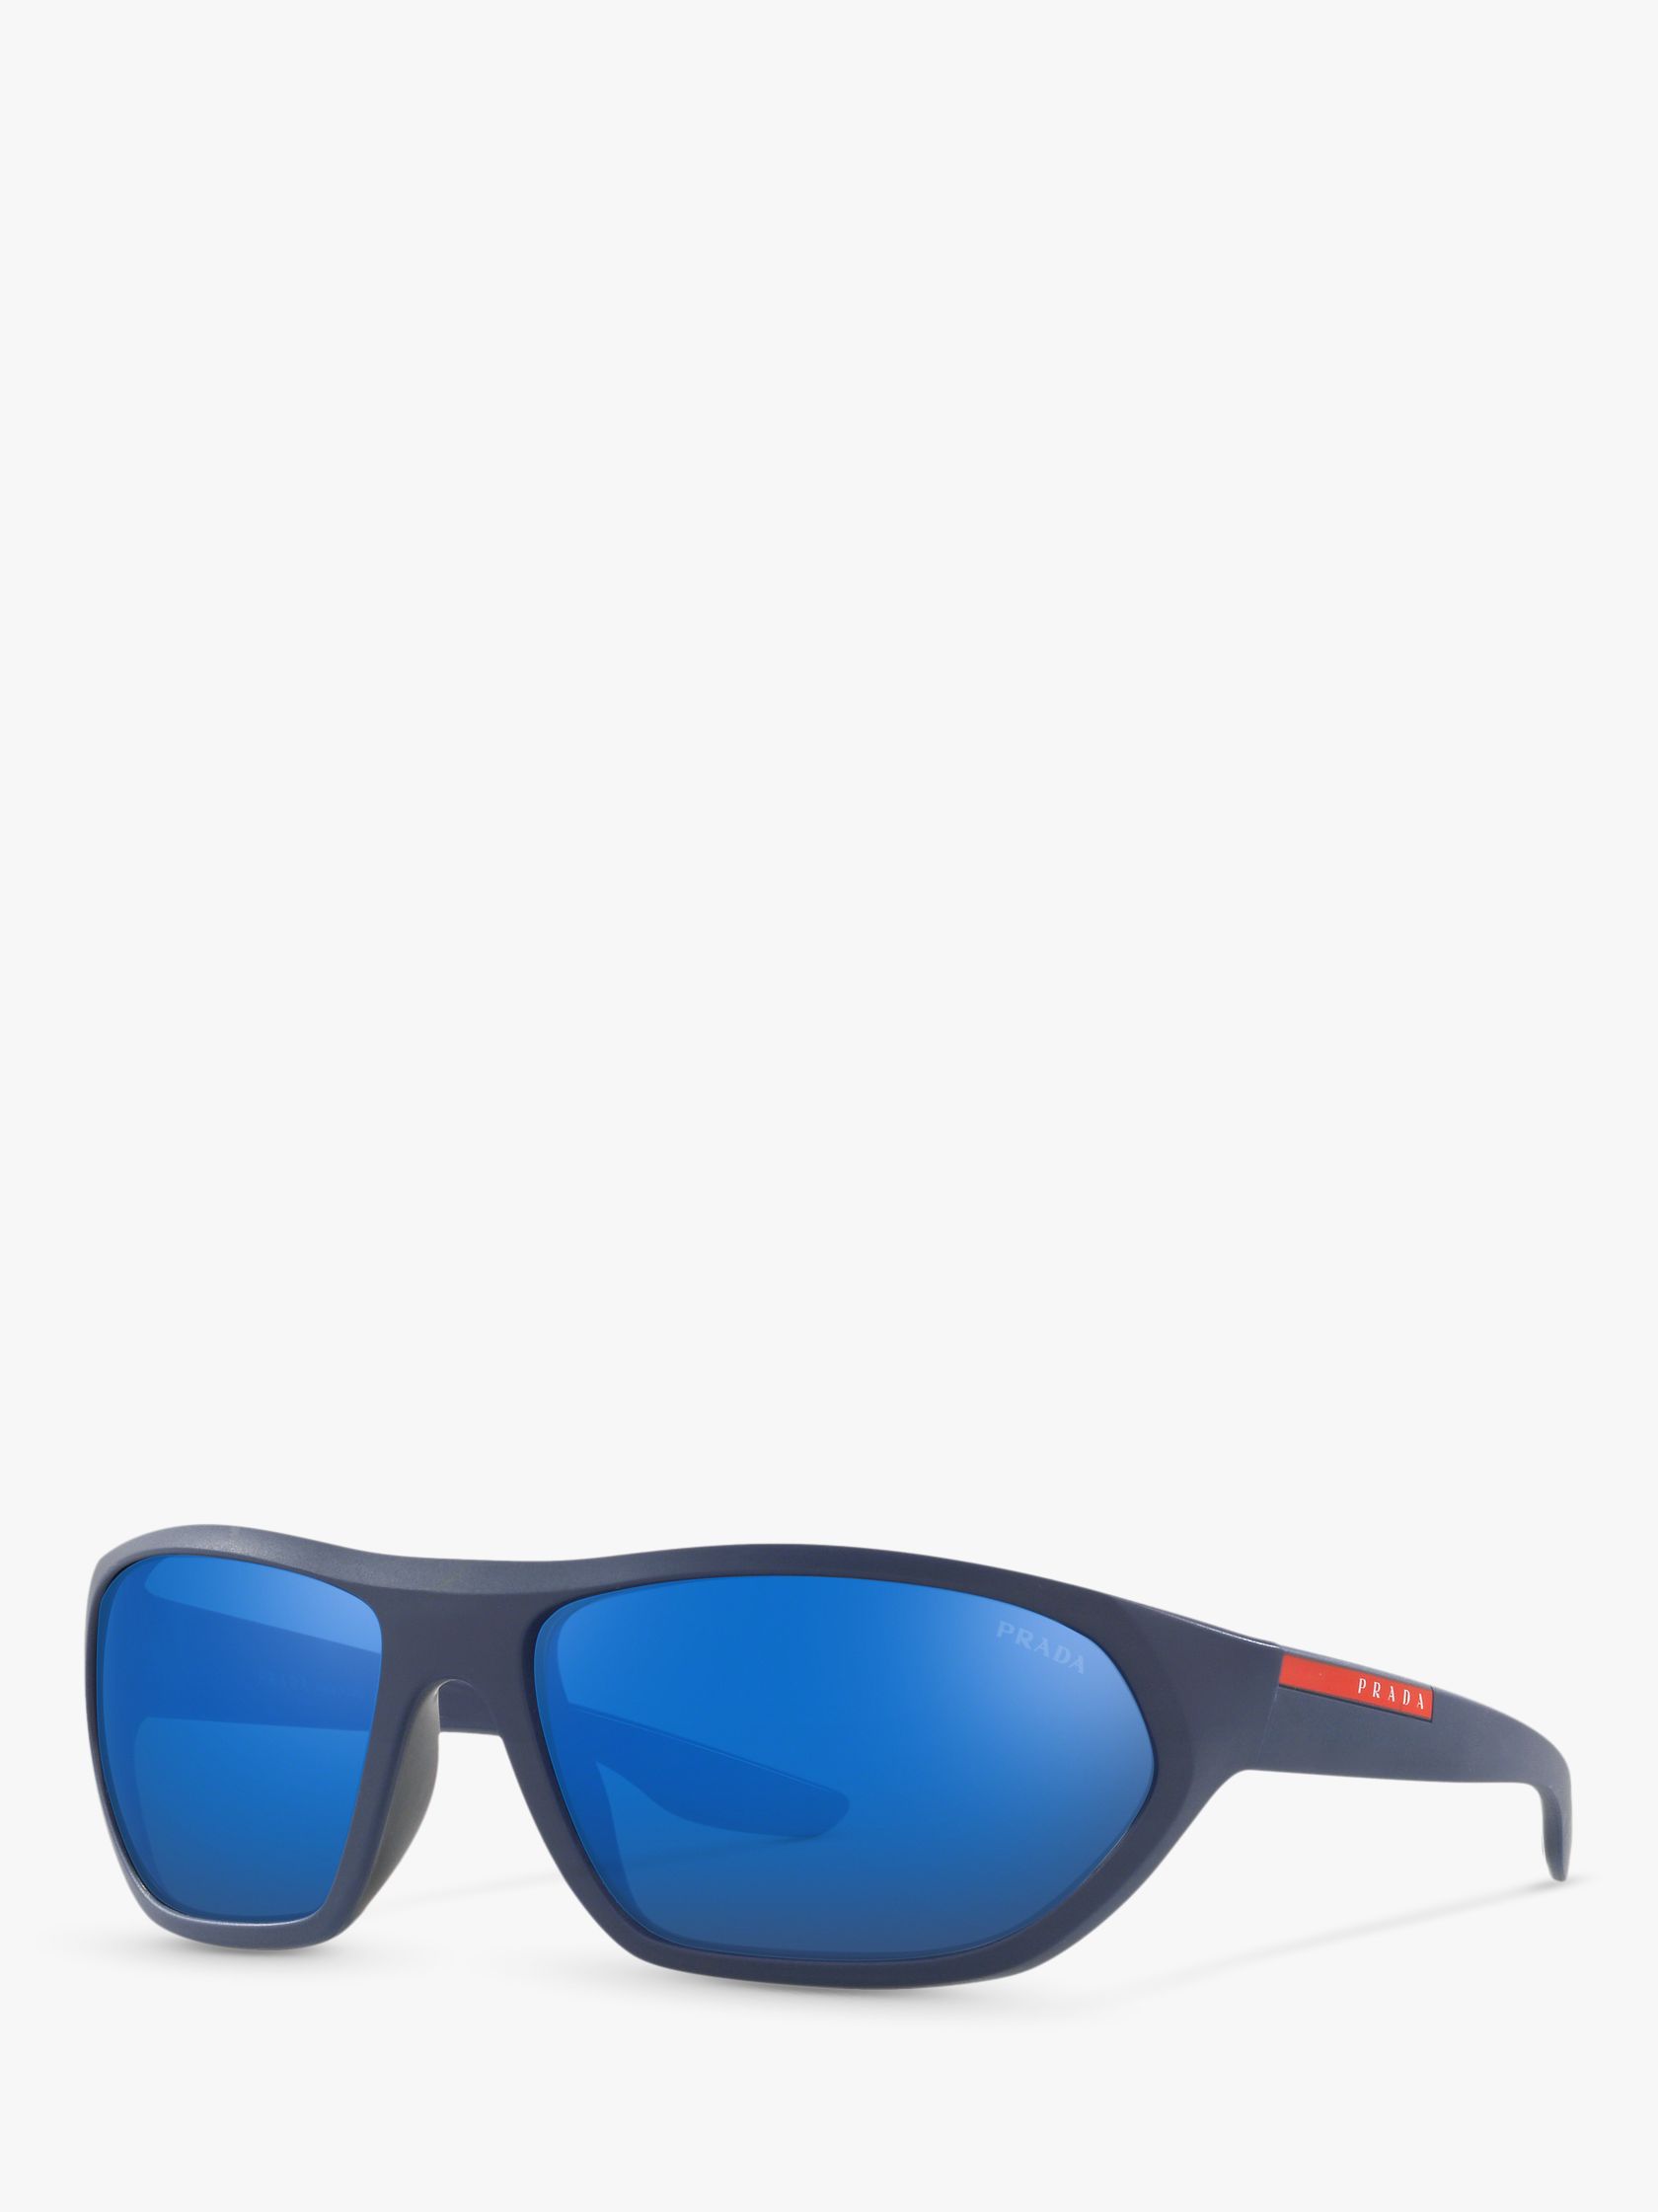 Prada Linea Rossa PS 18US Men's Active Rectangular Sunglasses, Matte  Blue/Mirror Blue